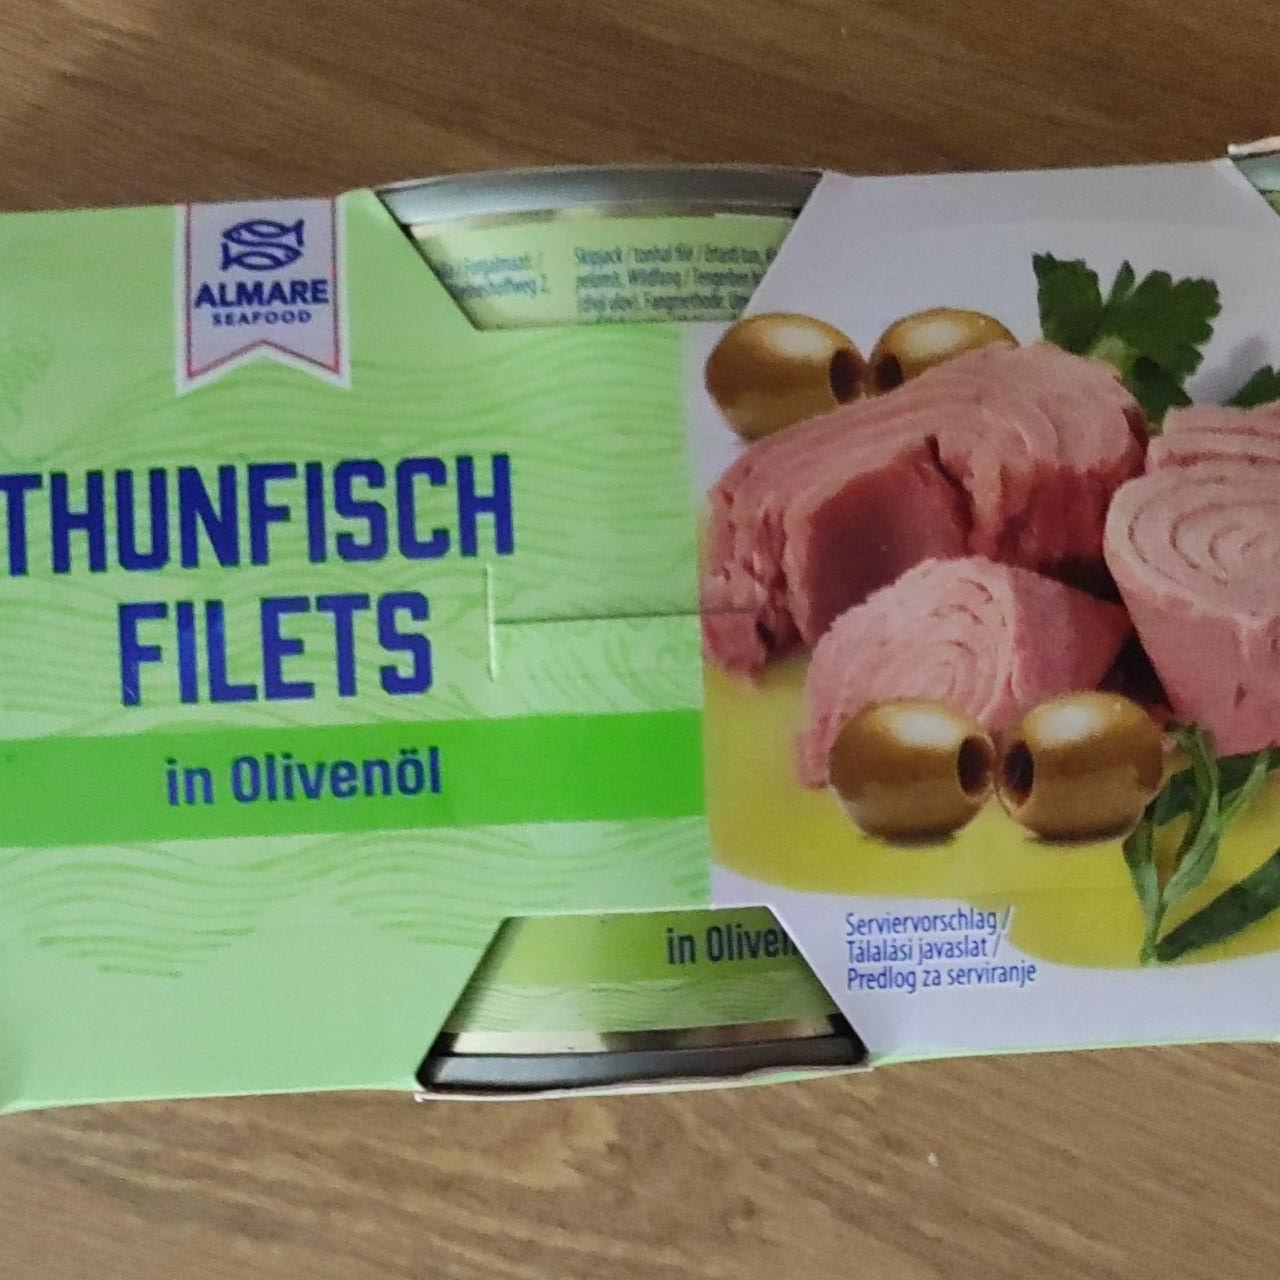 Fotografie - almare thunafish filets in olivenól